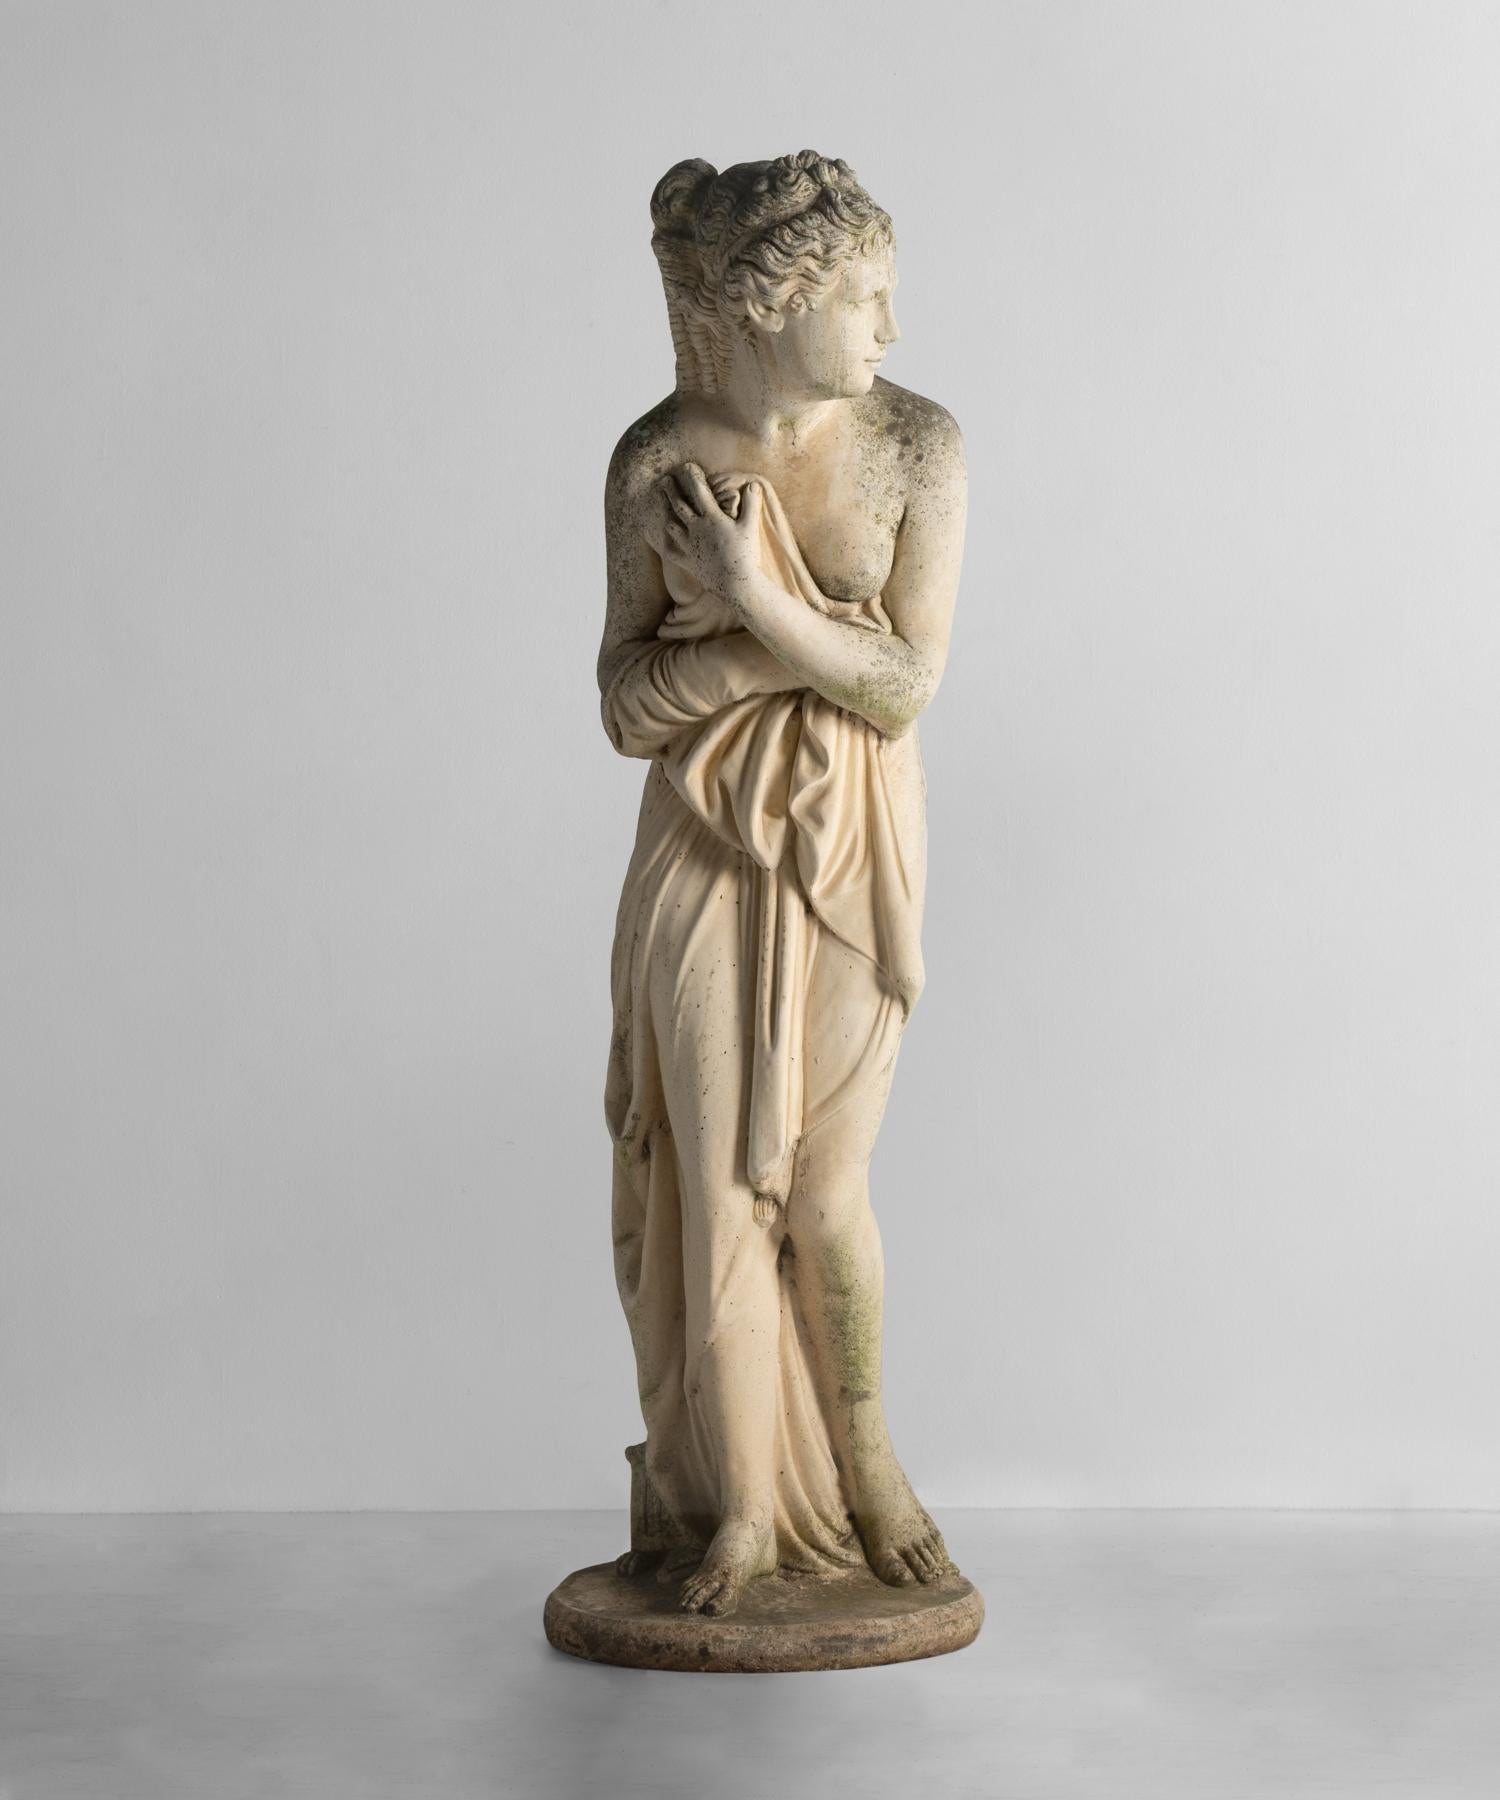 An elegant composite stone representation of Venus with a wonderful patina.